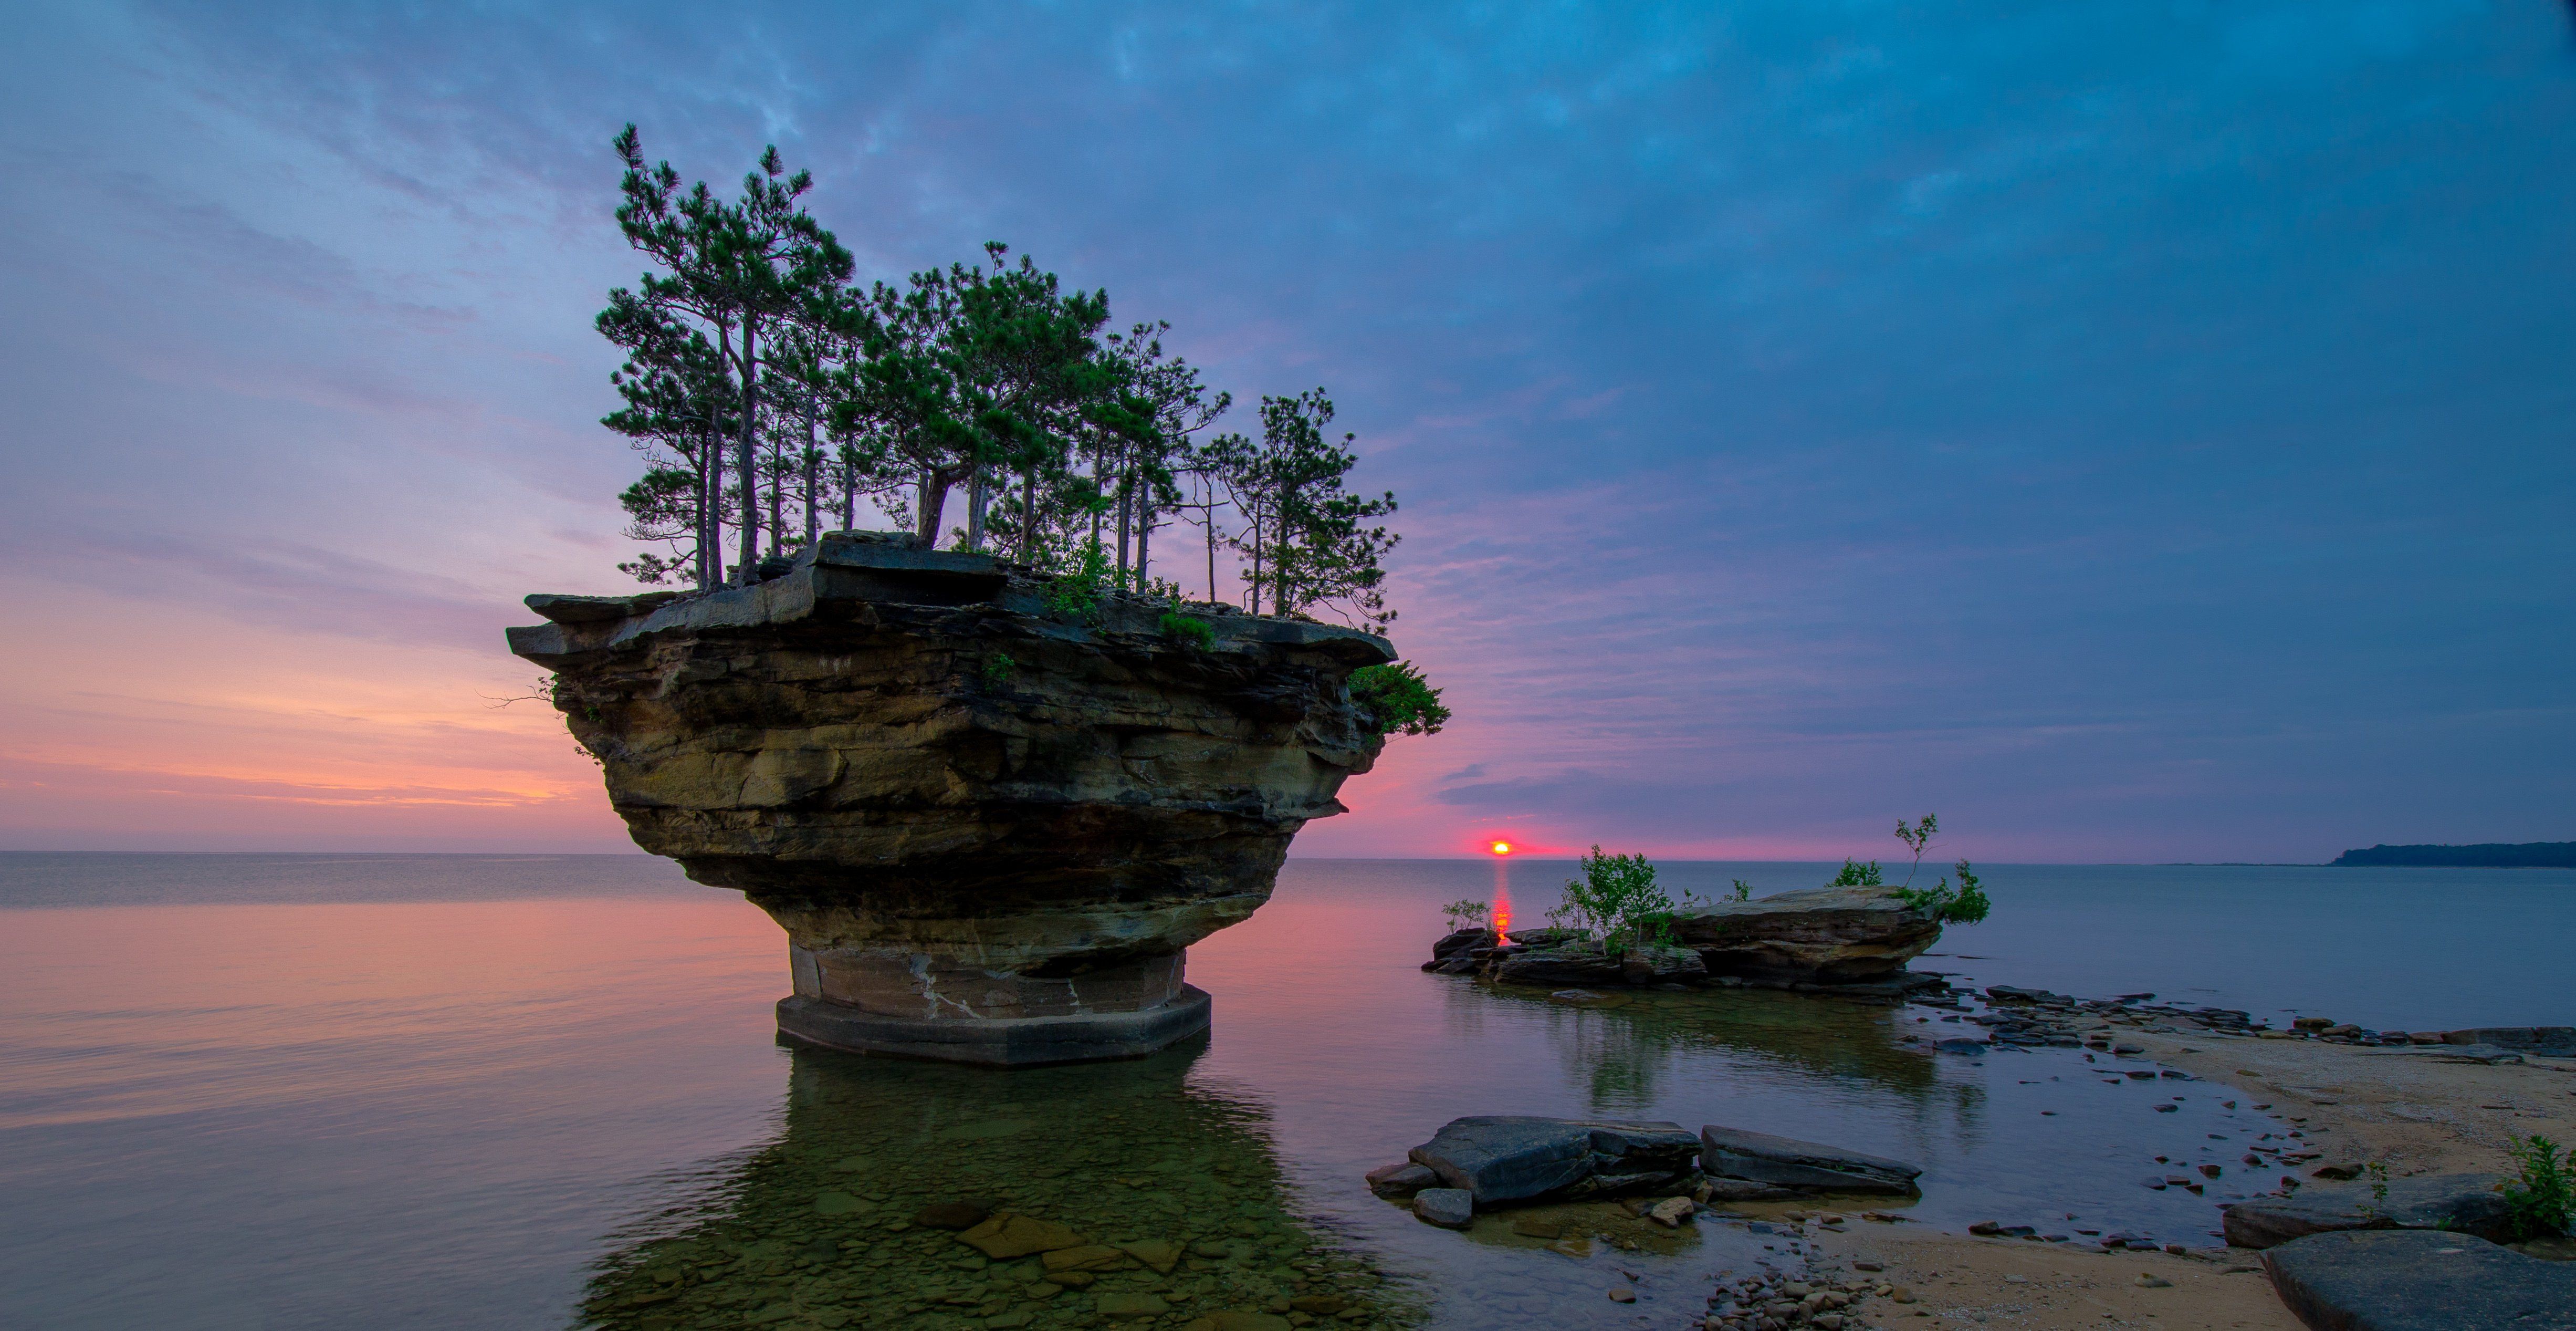 Michigan Lake Huron sunset rock trees landscape wallpaper